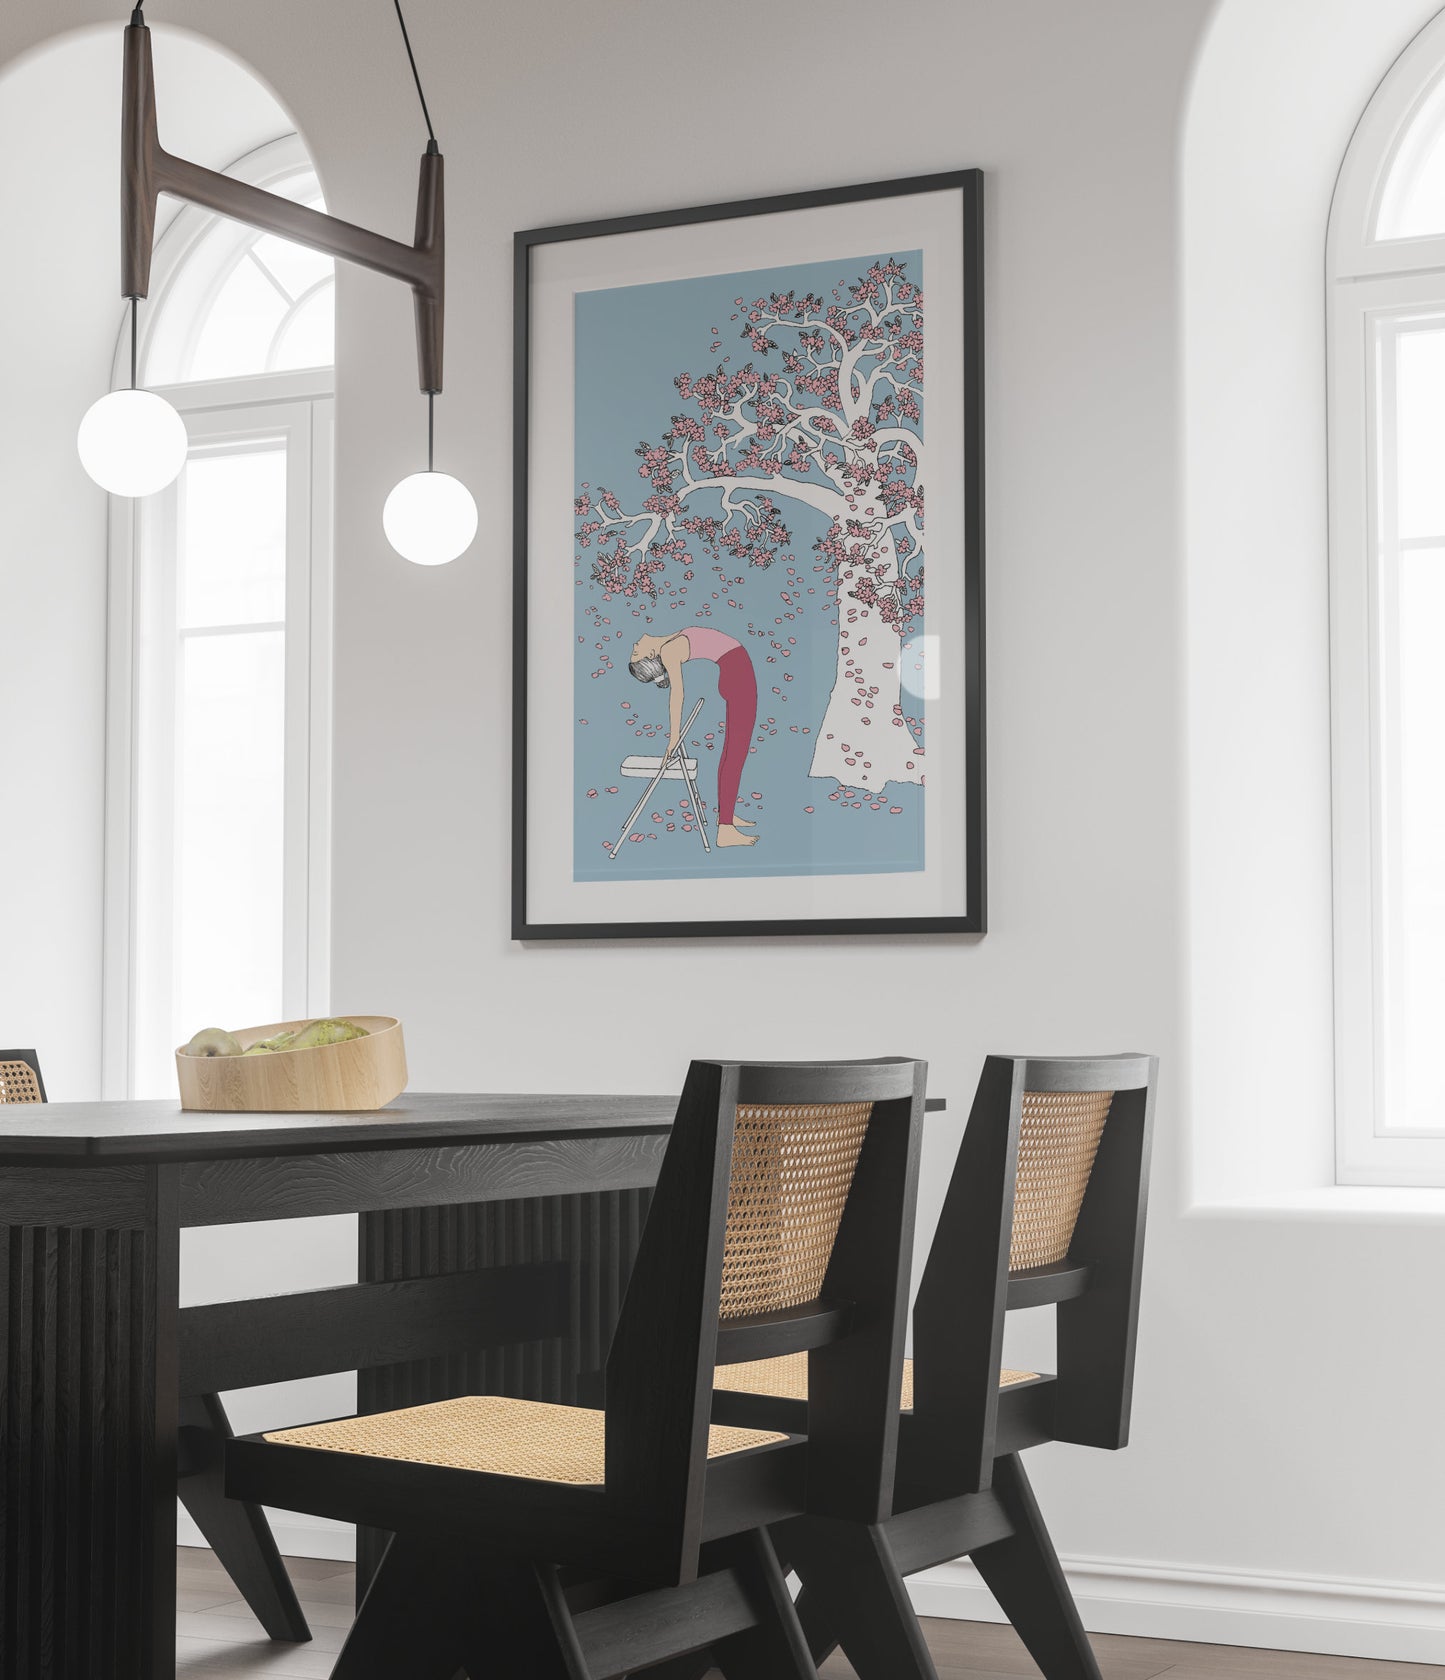 Svejar Yoga Art - Poster - Backbend Blossom Tree Mockup Living Room